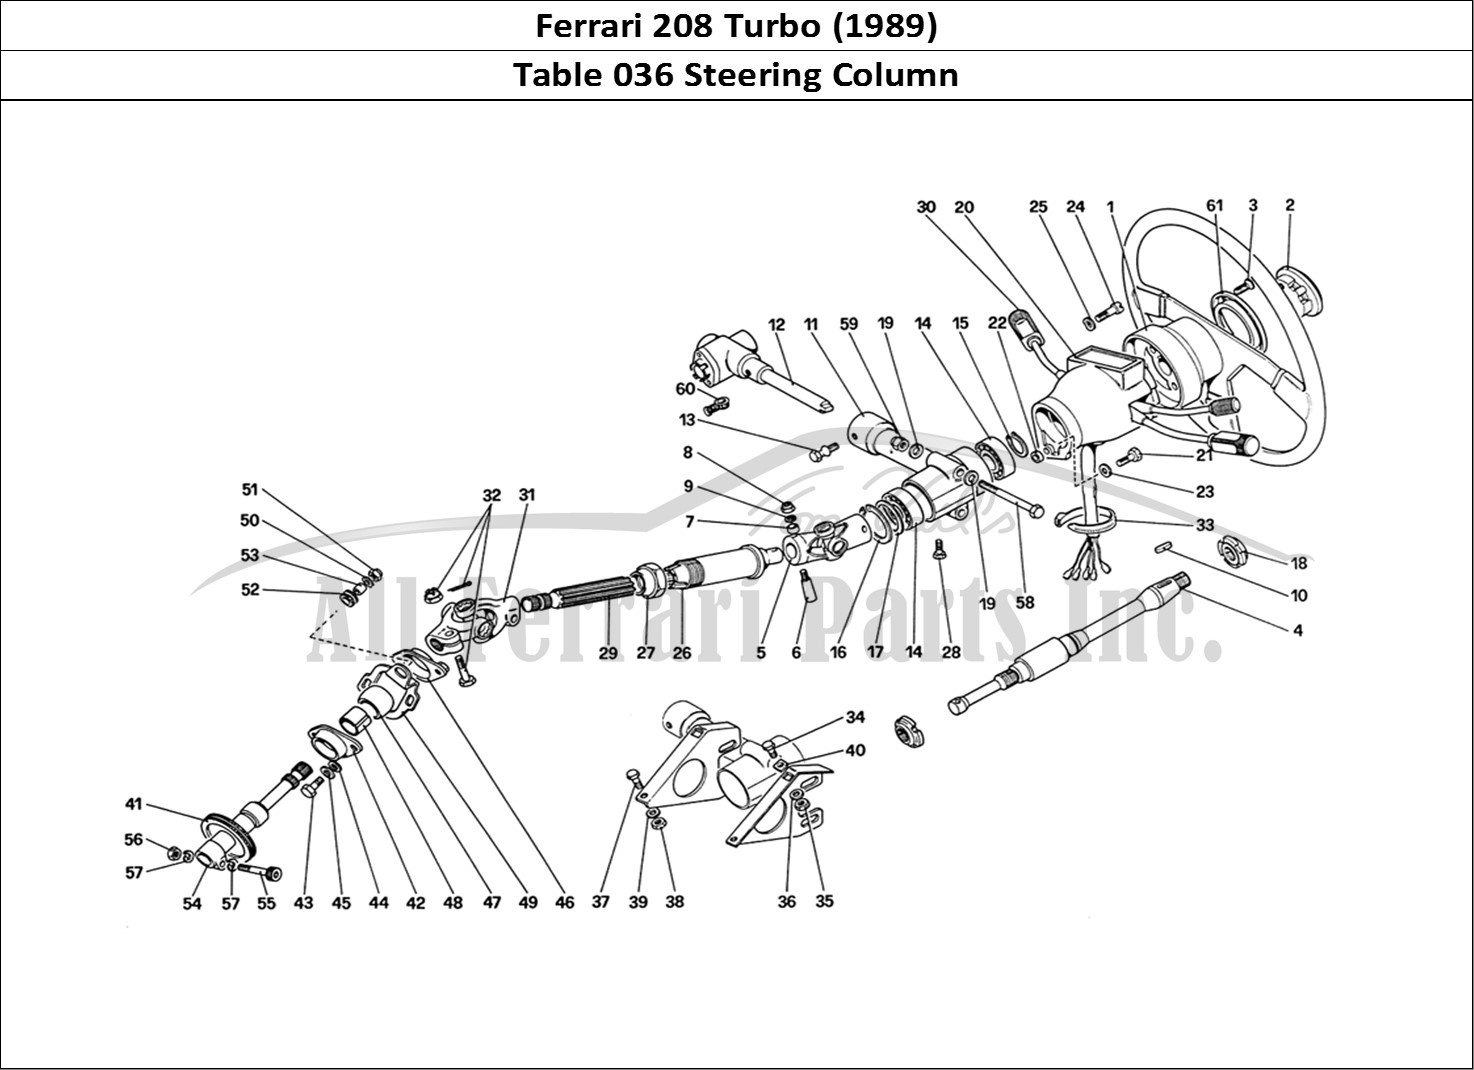 Ferrari Parts Ferrari 208 Turbo (1989) Page 036 Steering Column